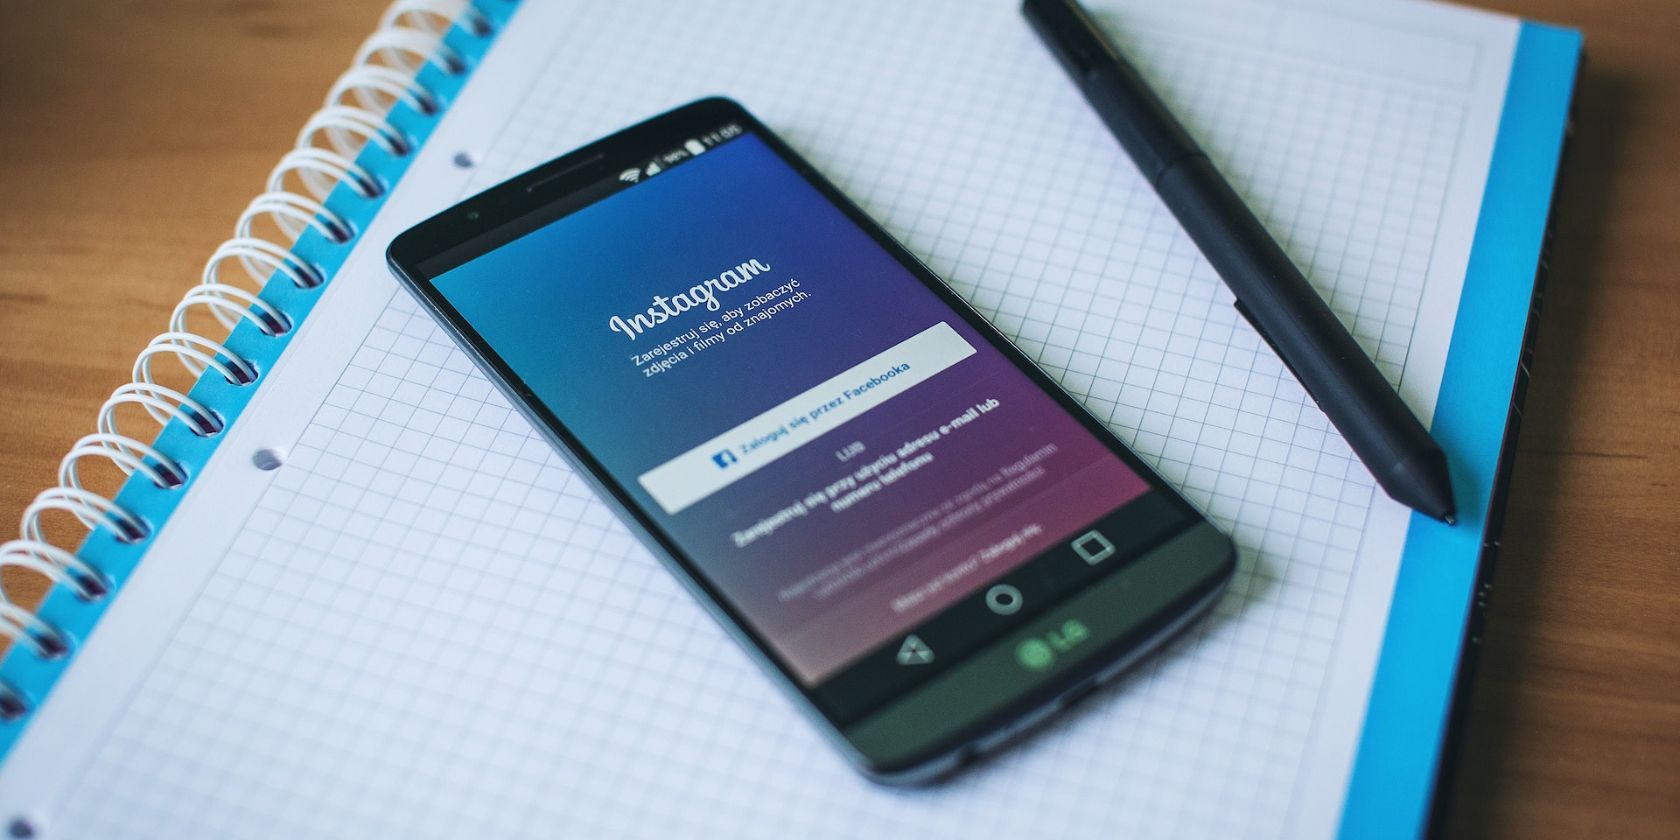 Instagram opened on smartphone